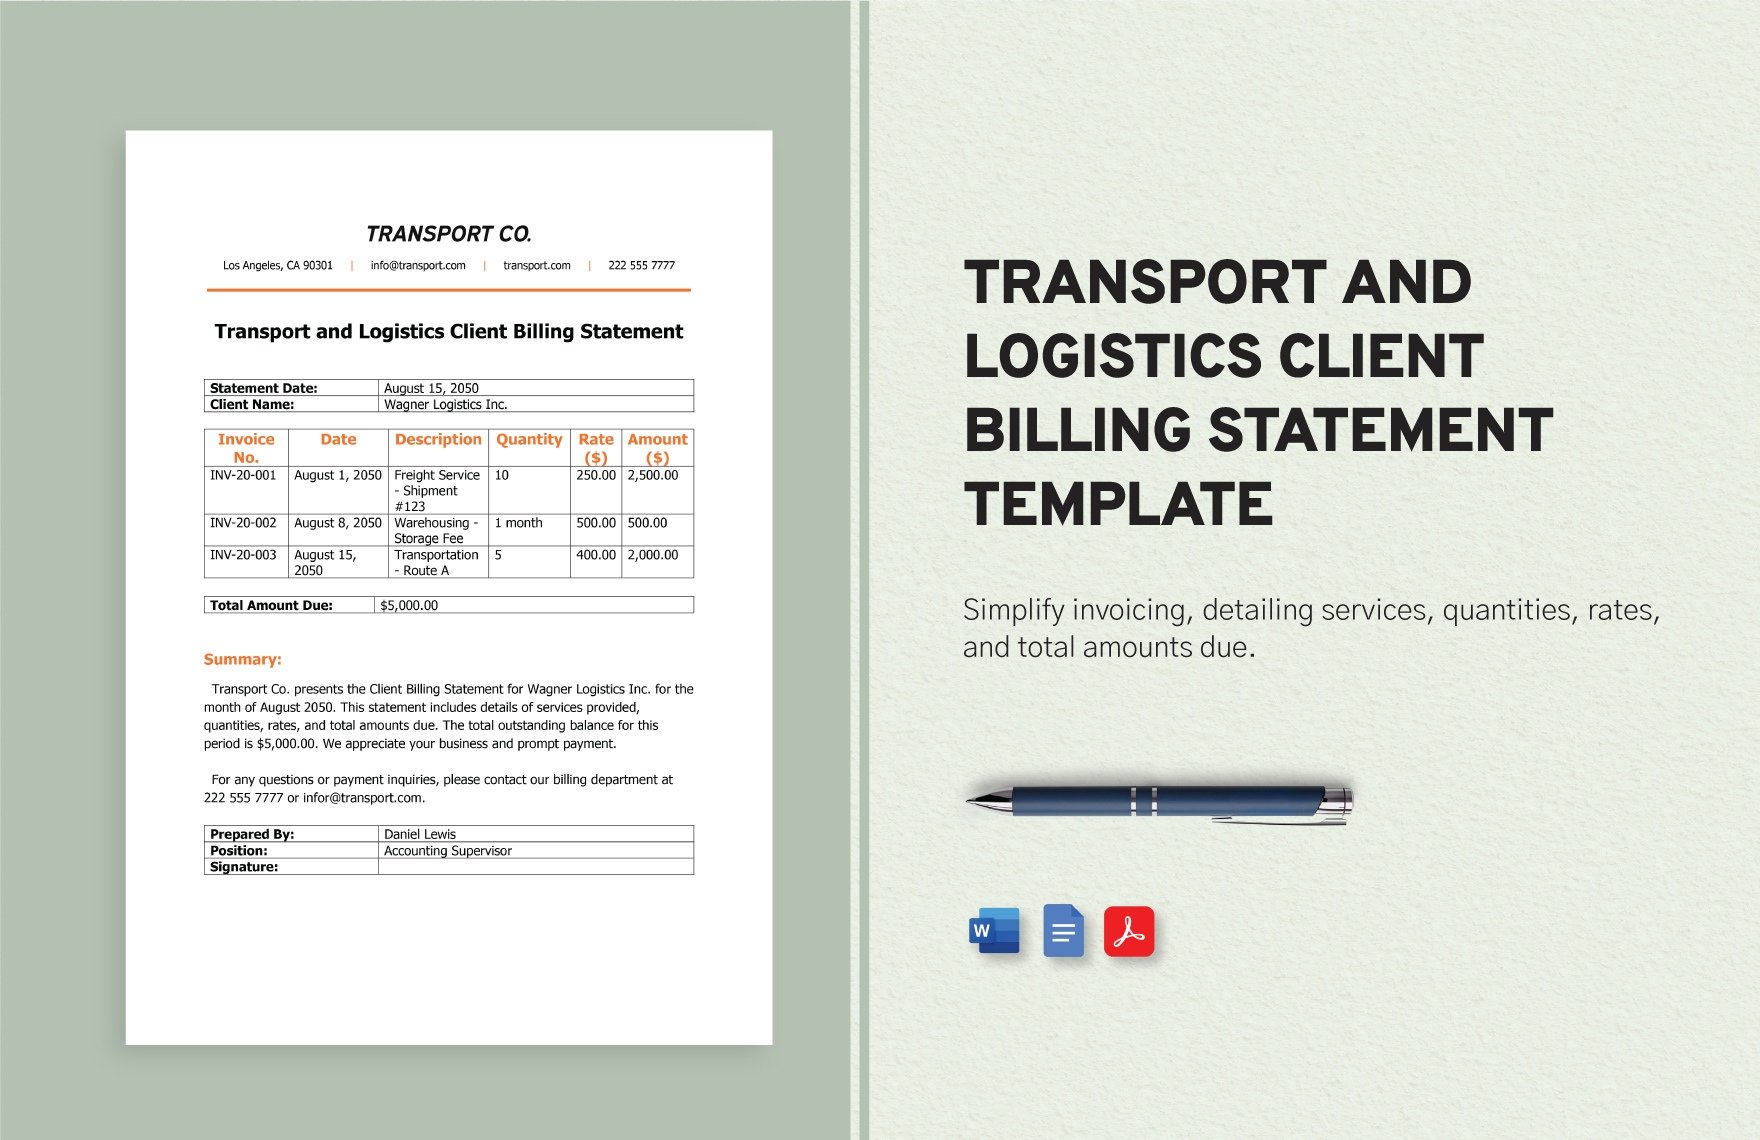 Transport and Logistics Client Billing Statement Template